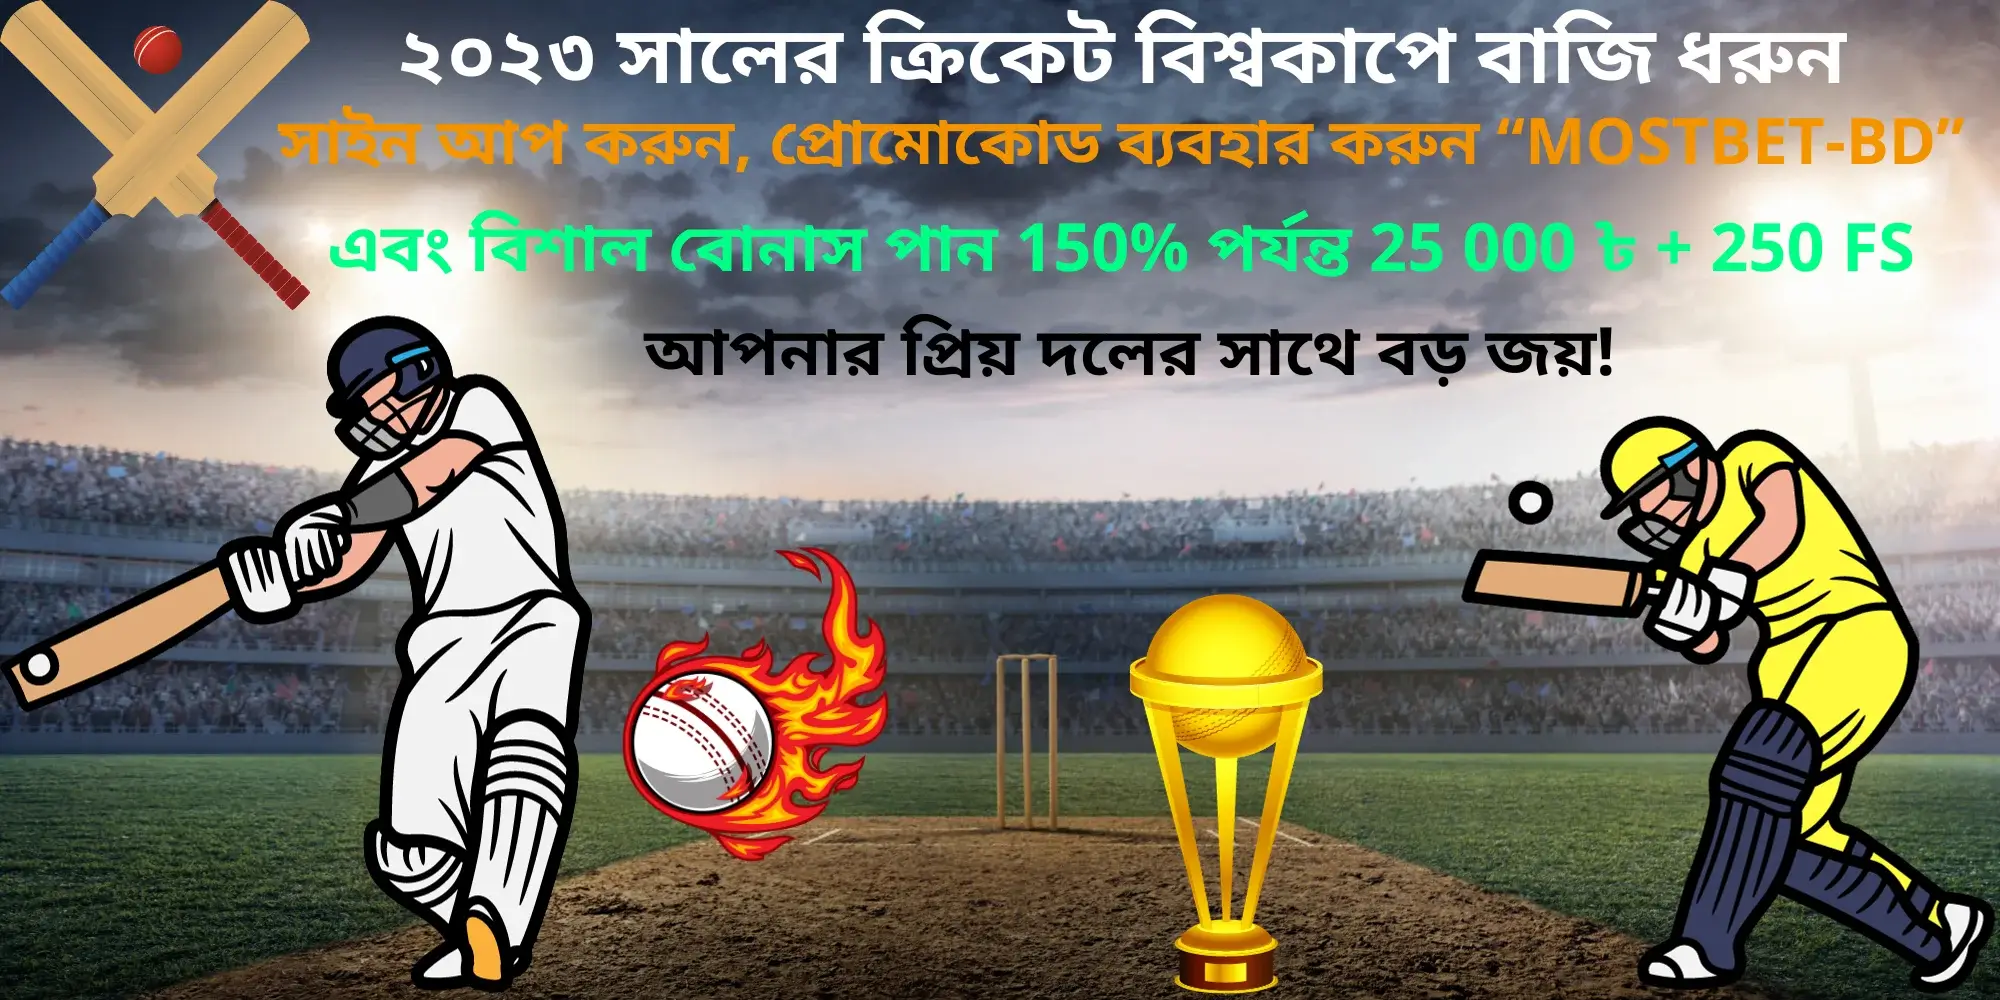 Mostbet Bangladesh Cricket World Cup